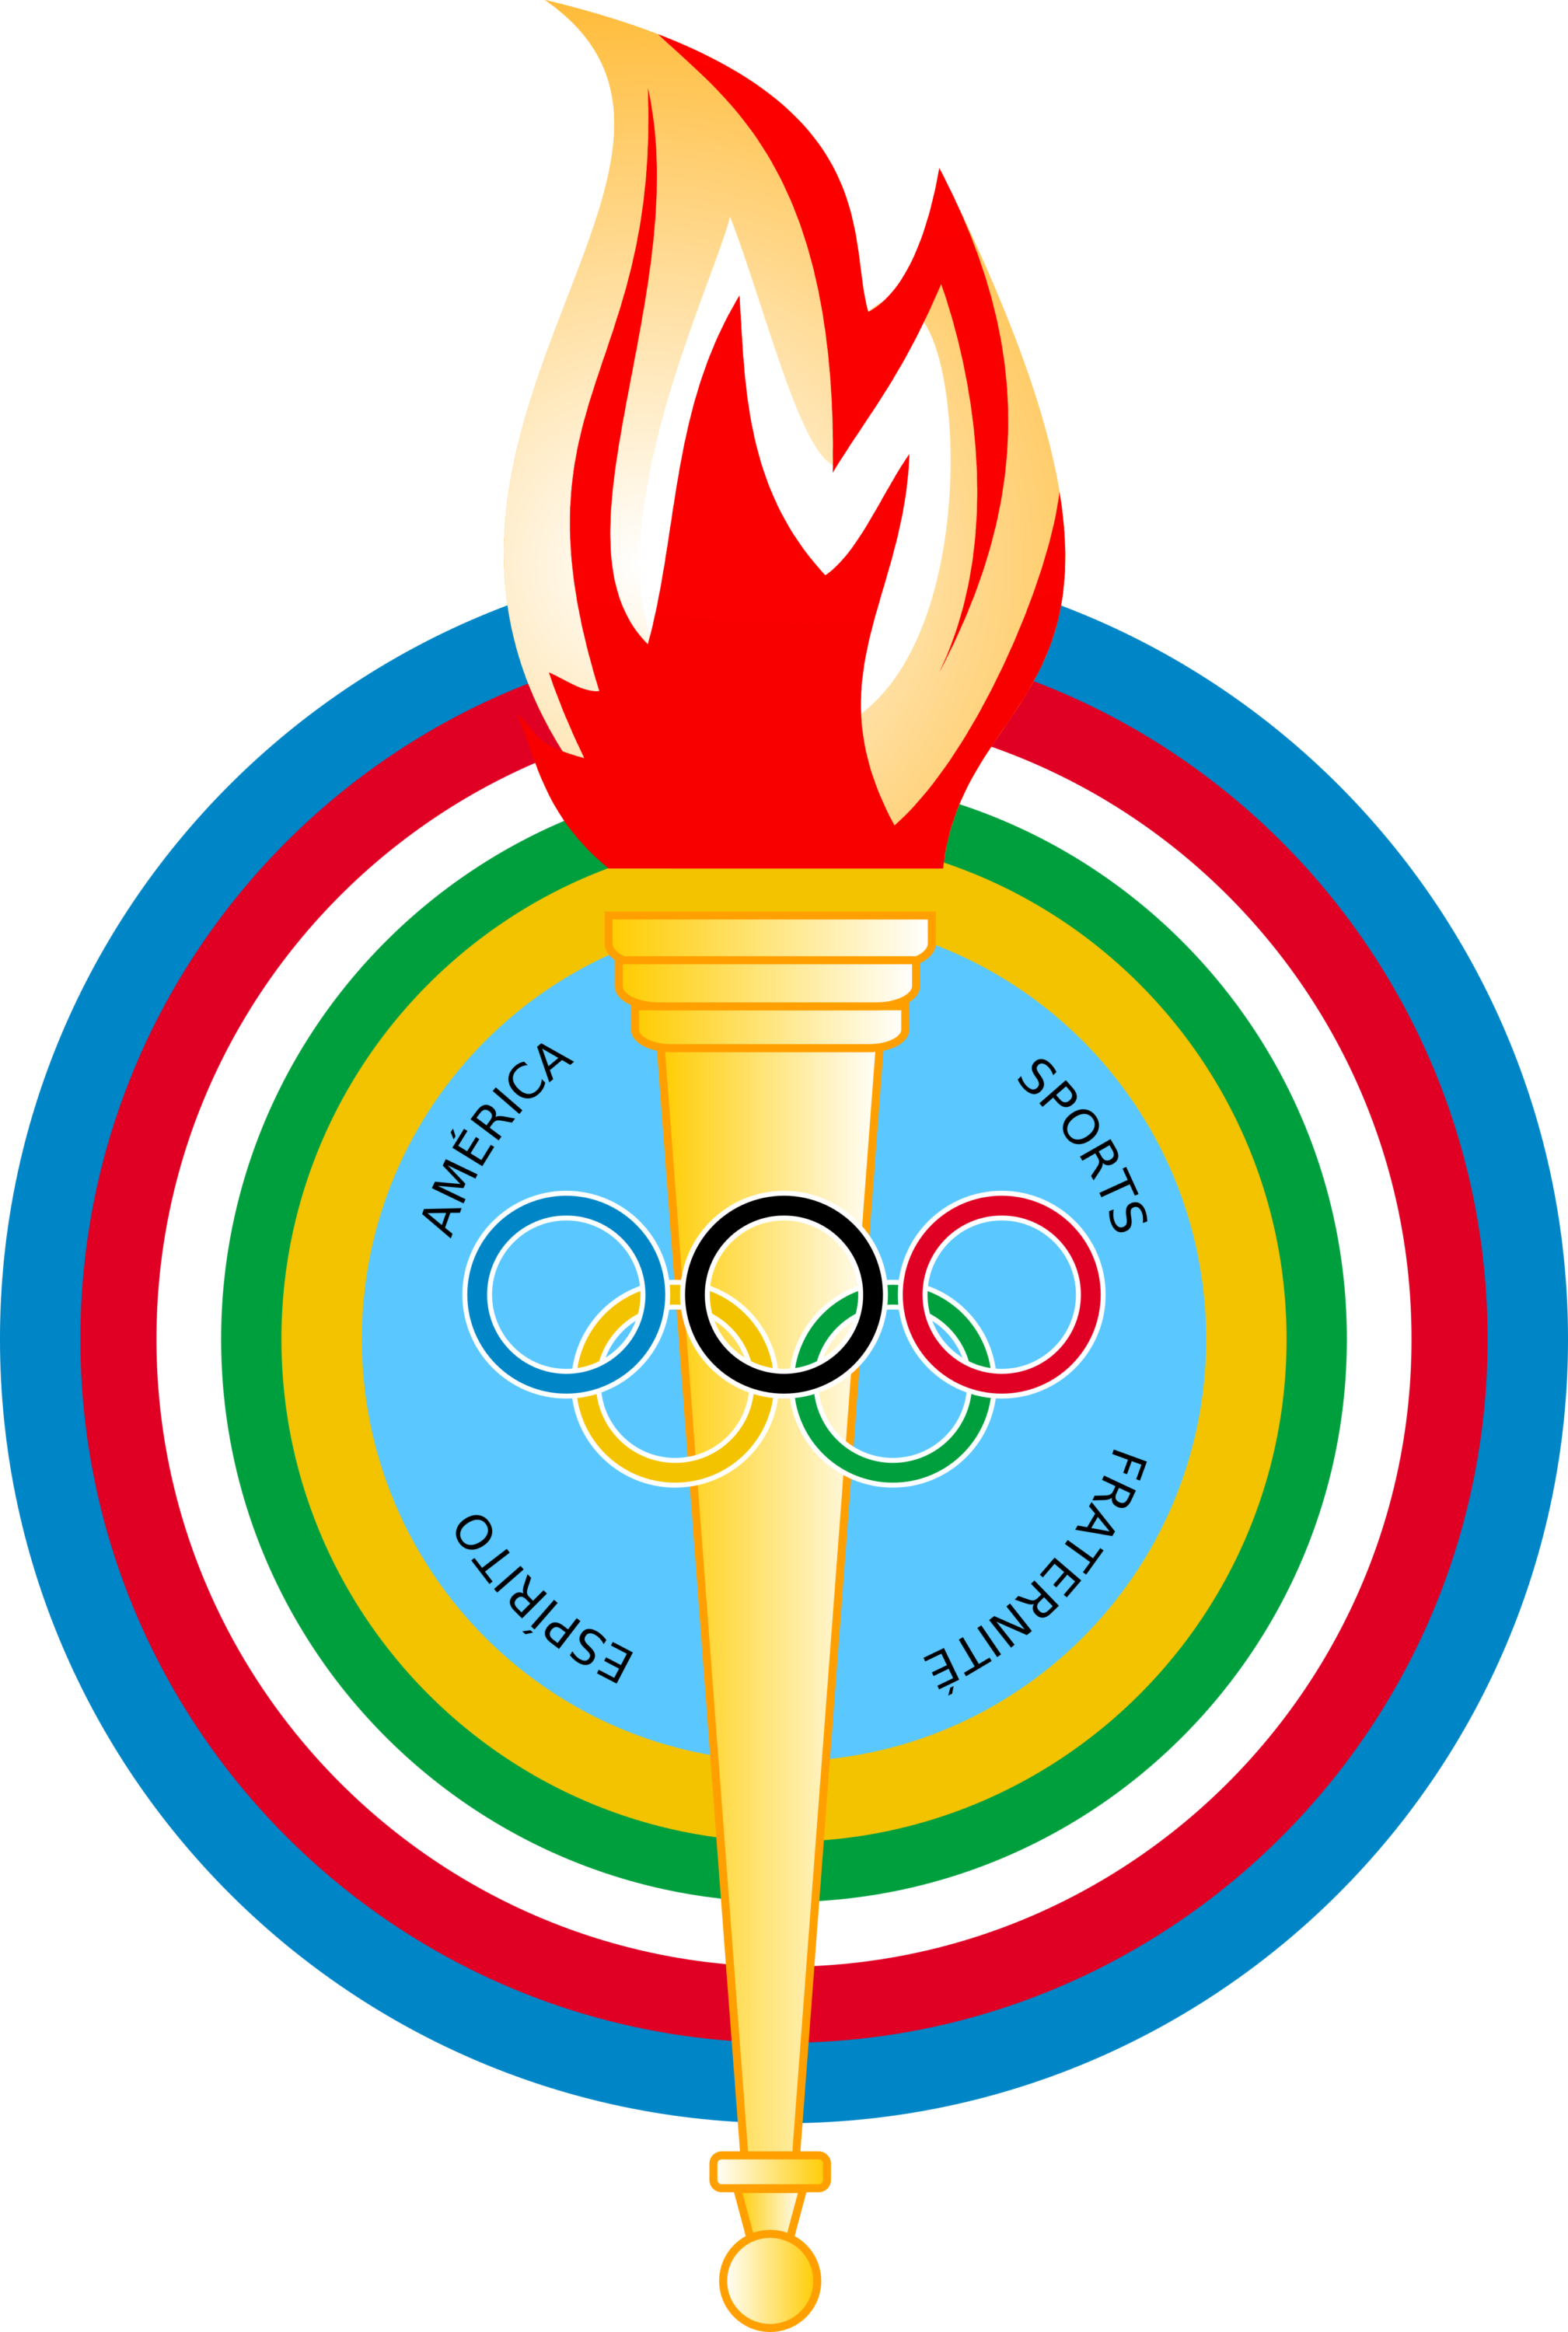 Pan American Games vector logo Download for free